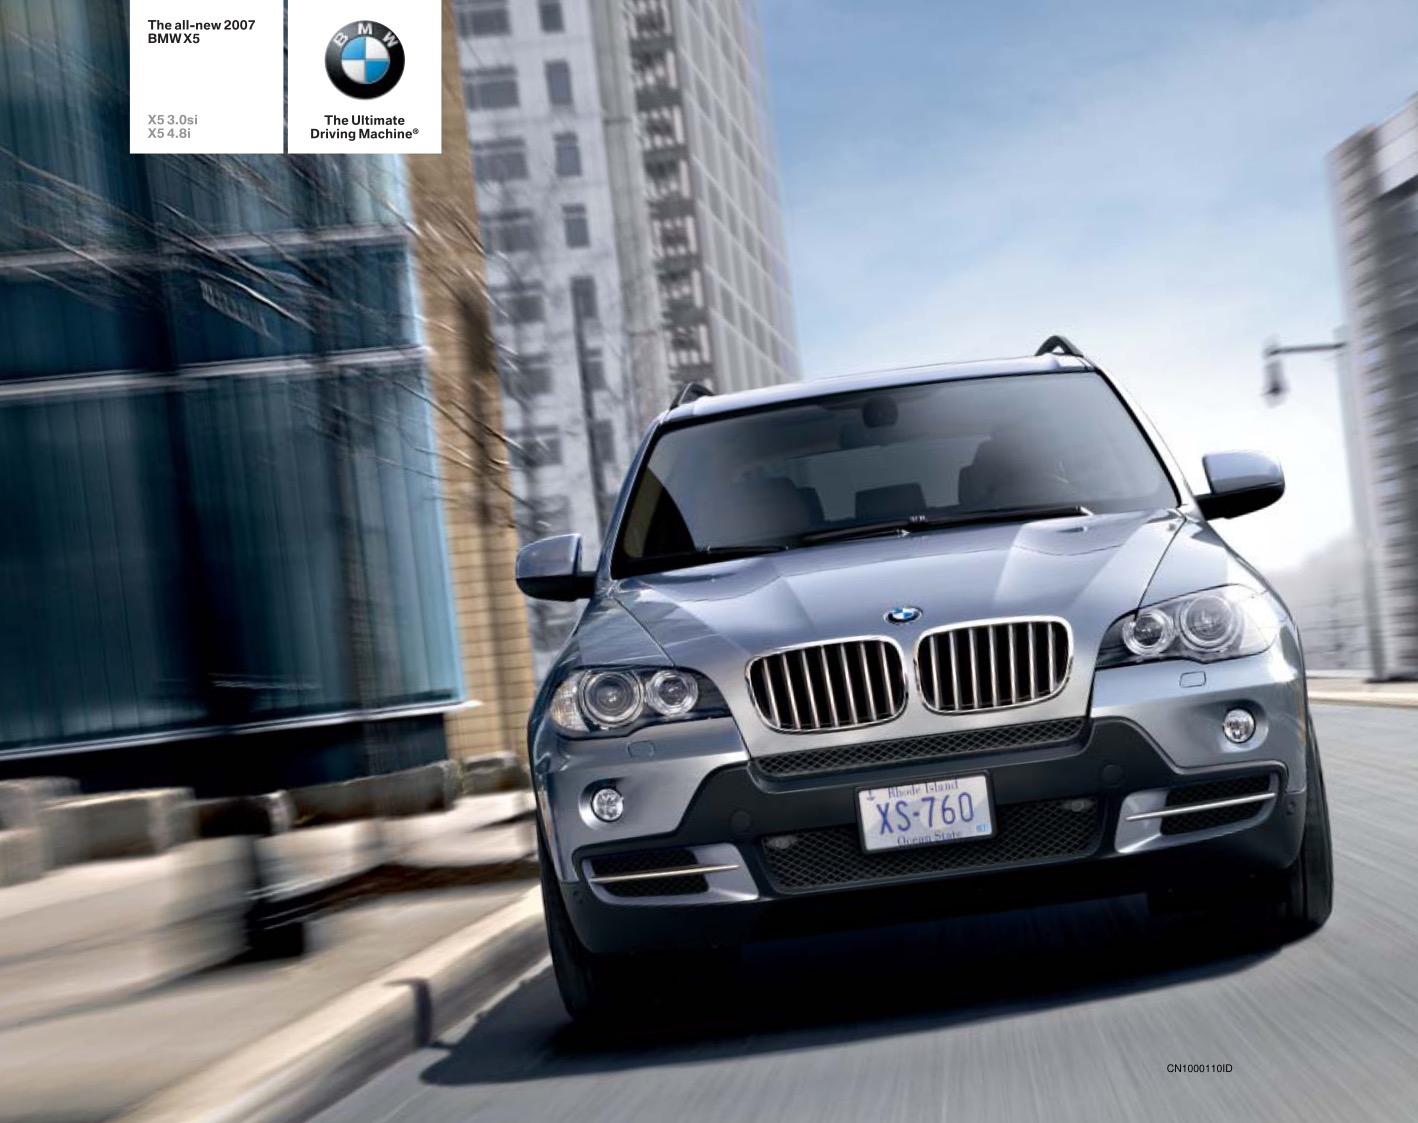 2007 BMW X5 Brochure